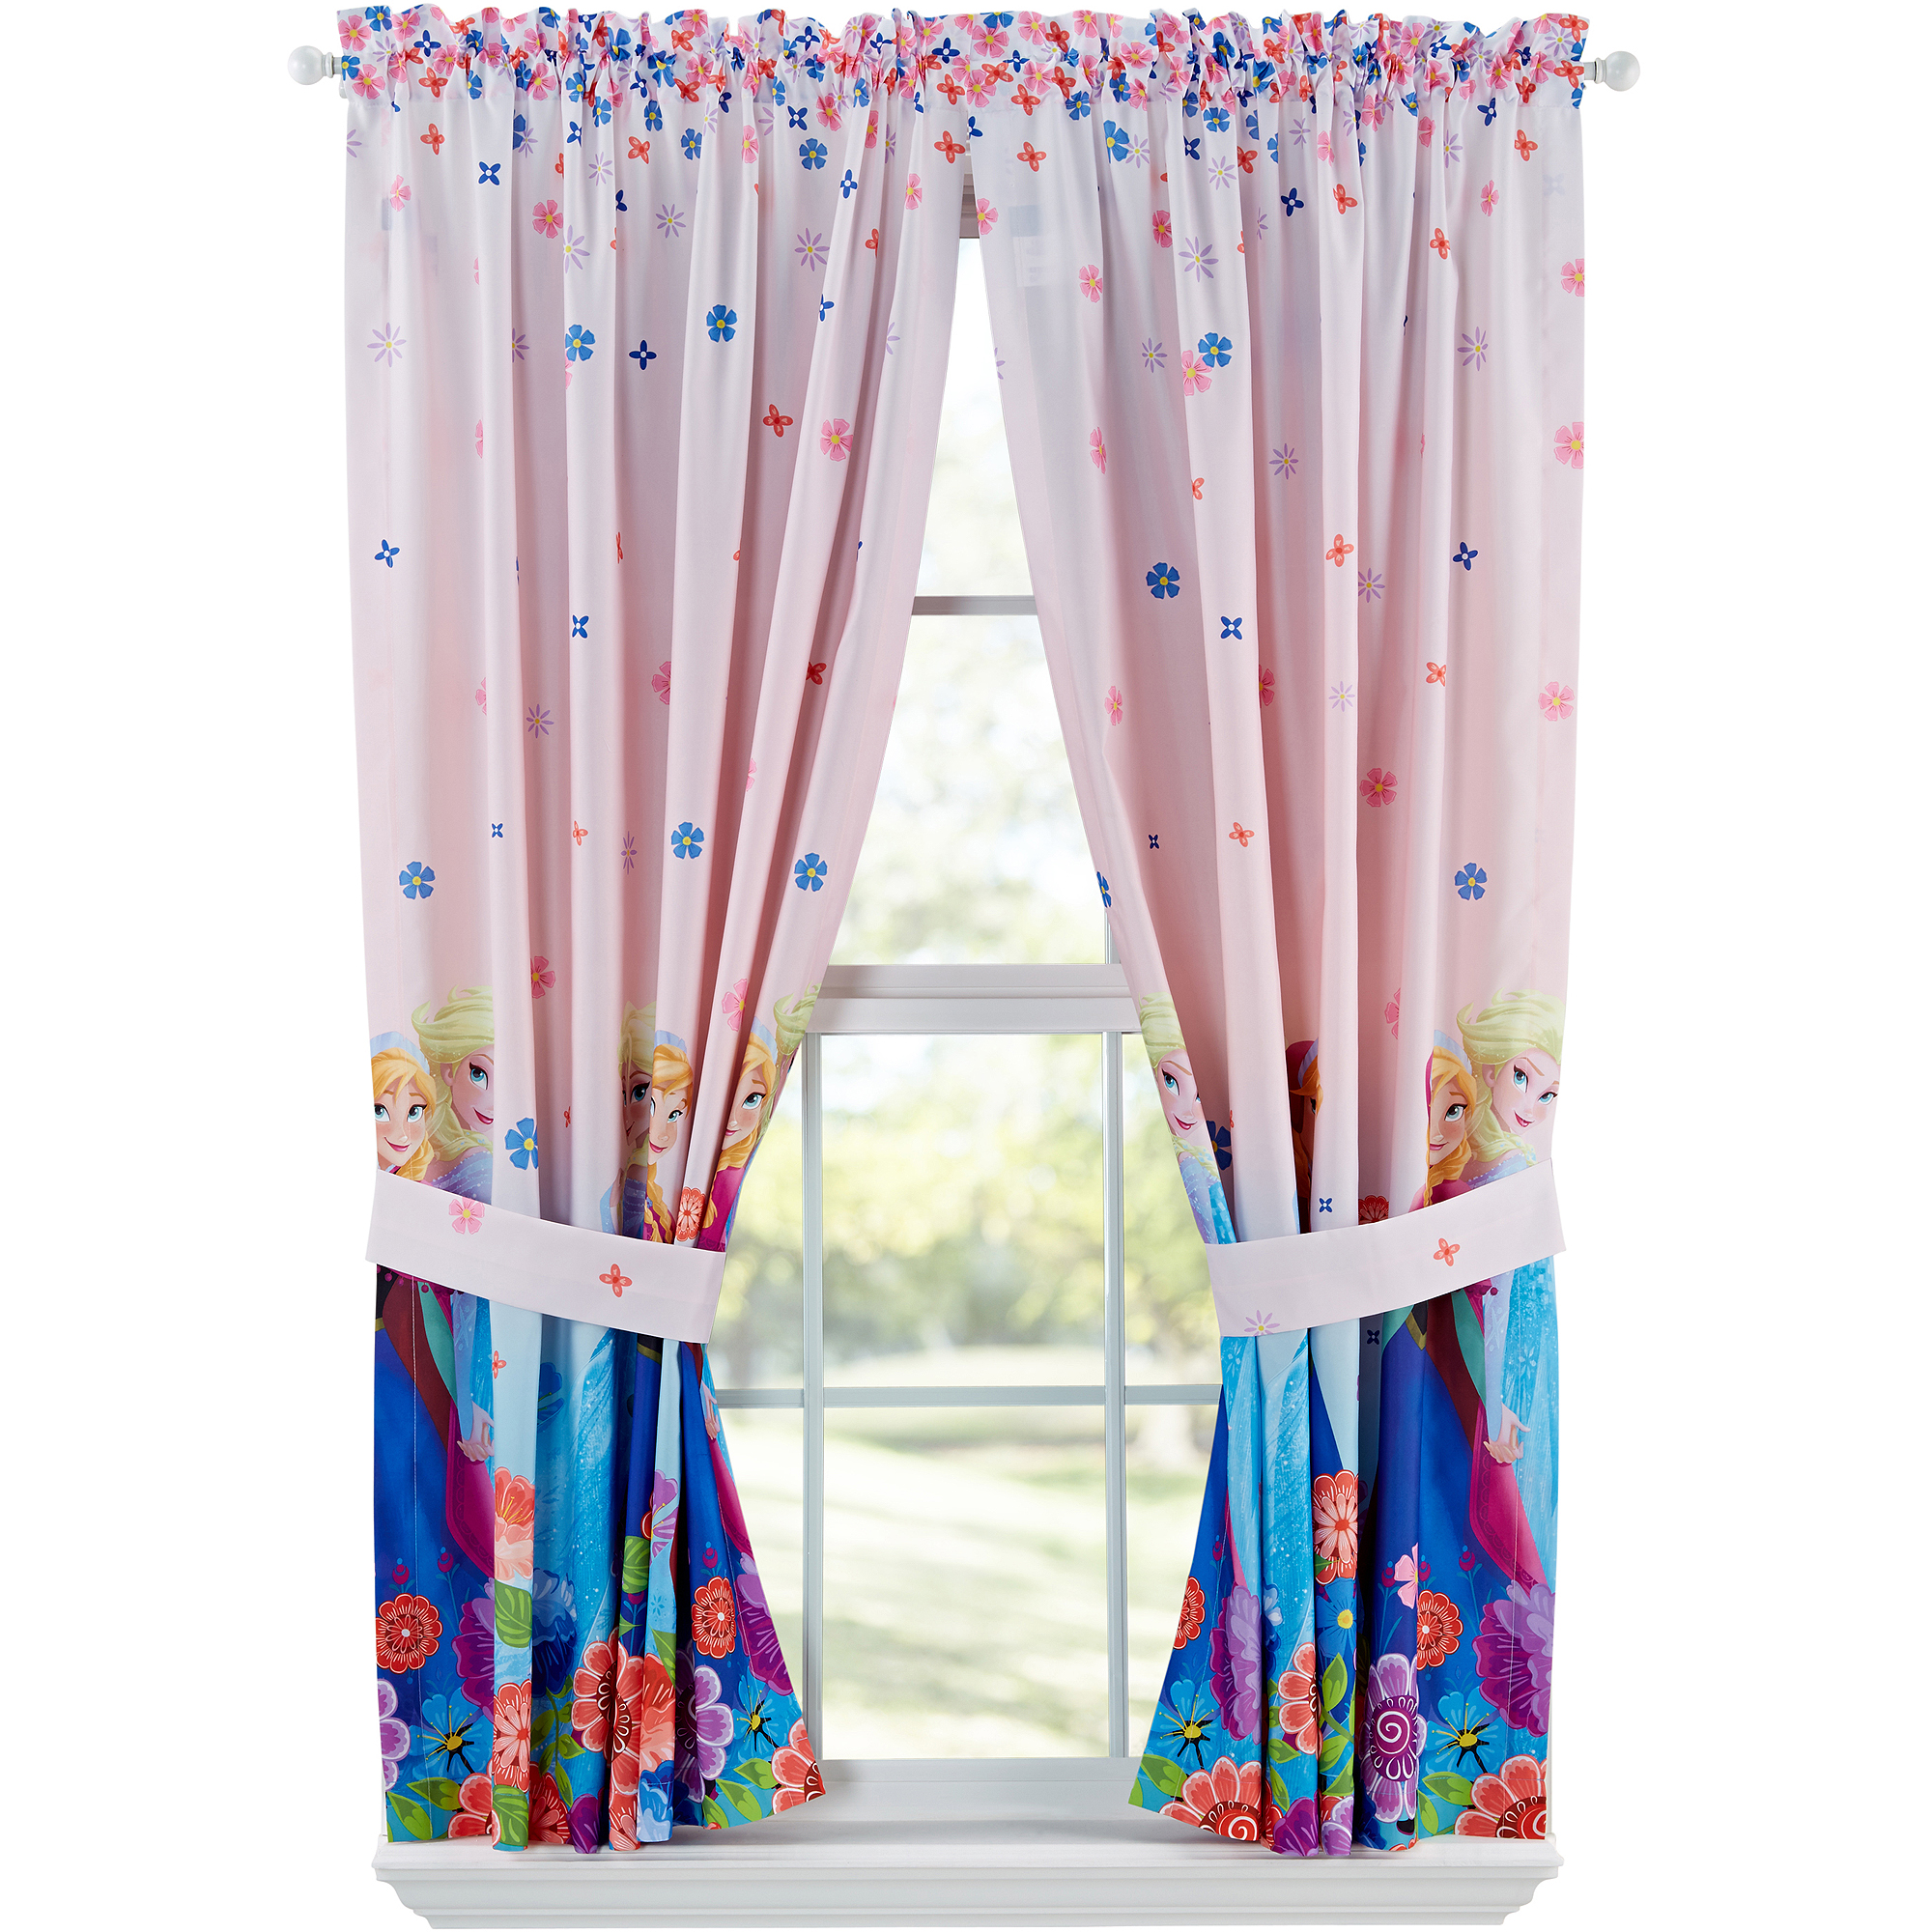 Disney Frozen Breeze Into Spring Girls Bedroom Curtain Panel Set - image 1 of 2